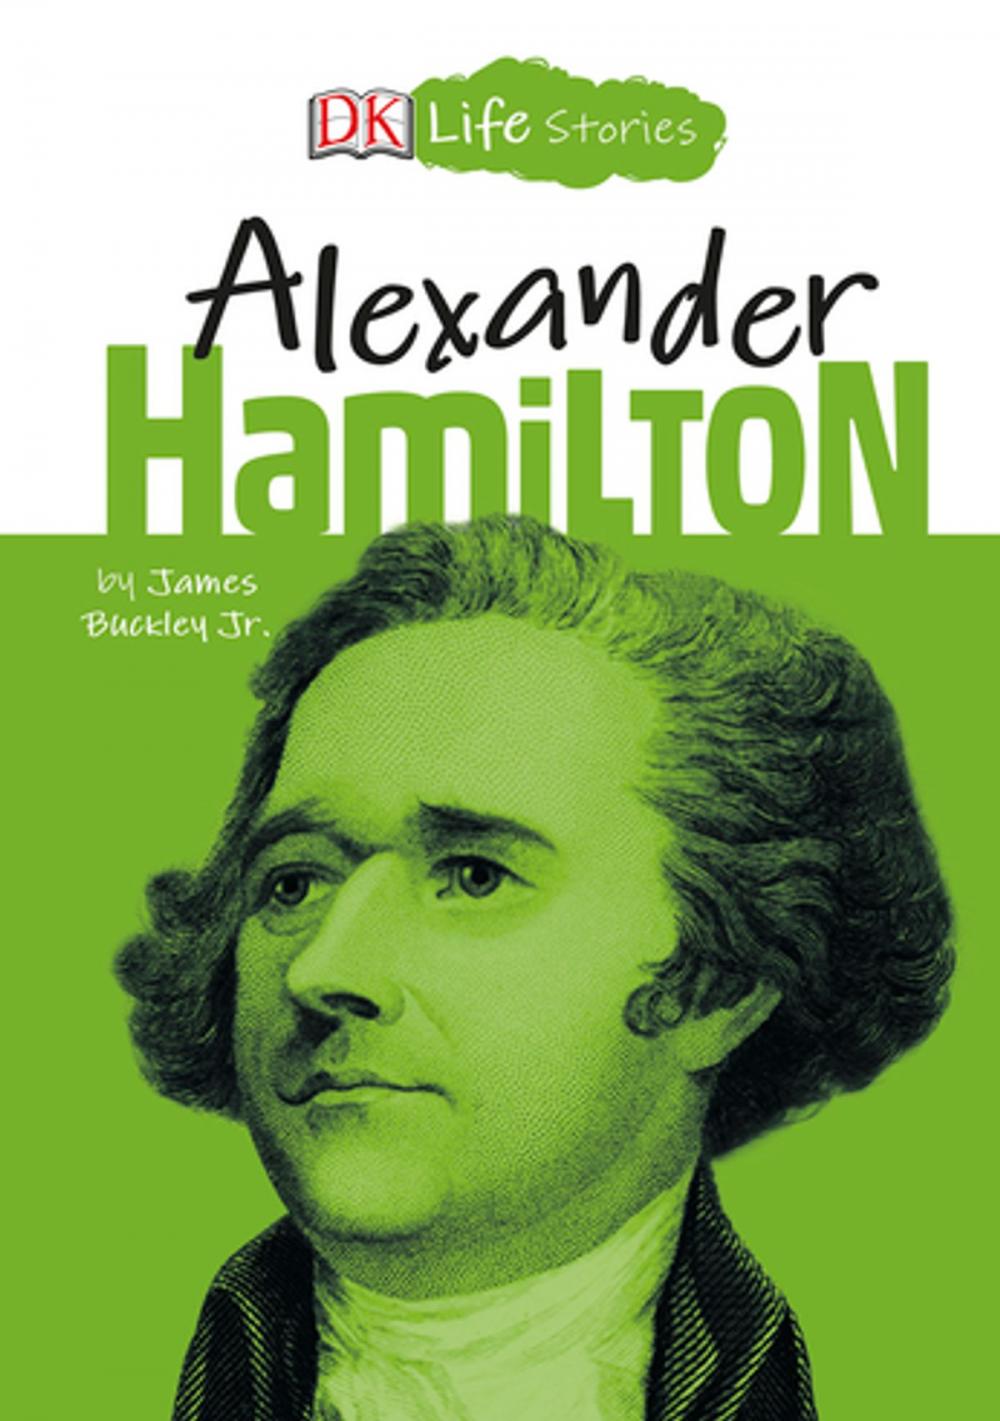 Big bigCover of DK Life Stories Alexander Hamilton